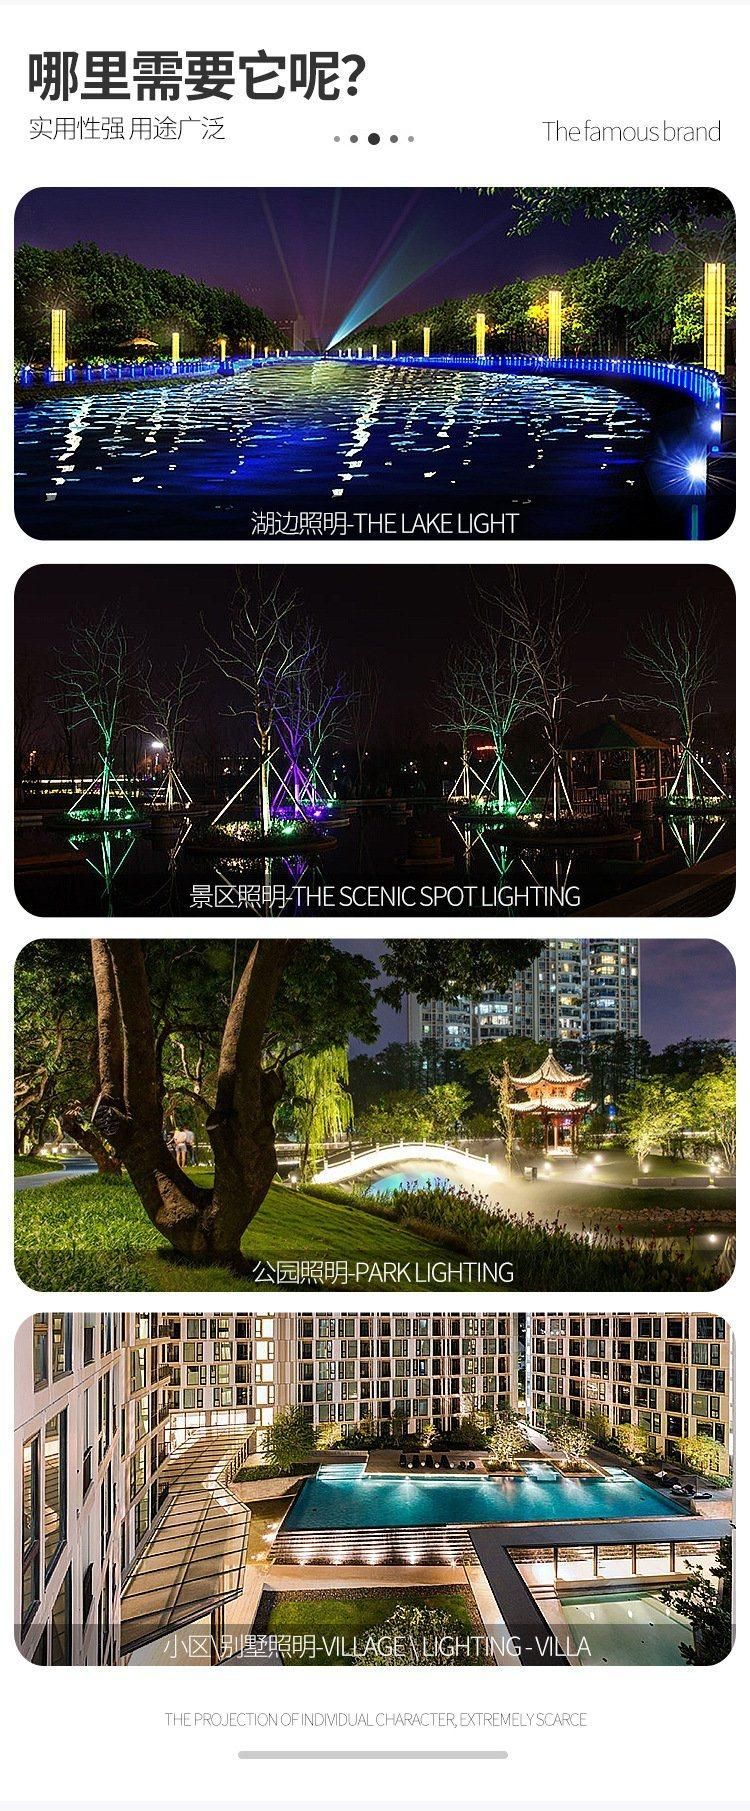 Outdoor Adjustable Light Architectural Park Lighting Round LED Floodlight